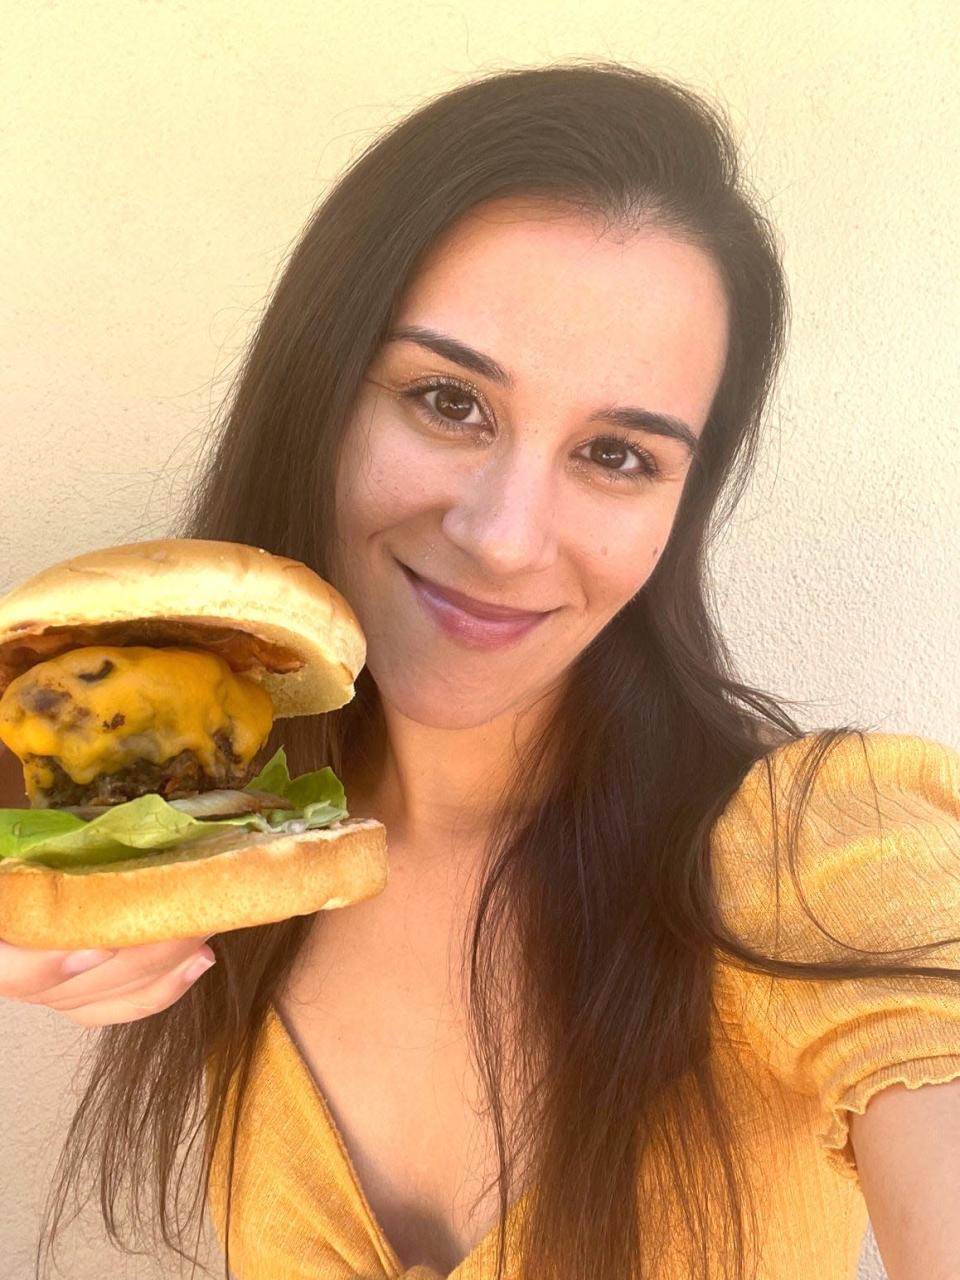 Anneta with Gordon Ramsay's Burger